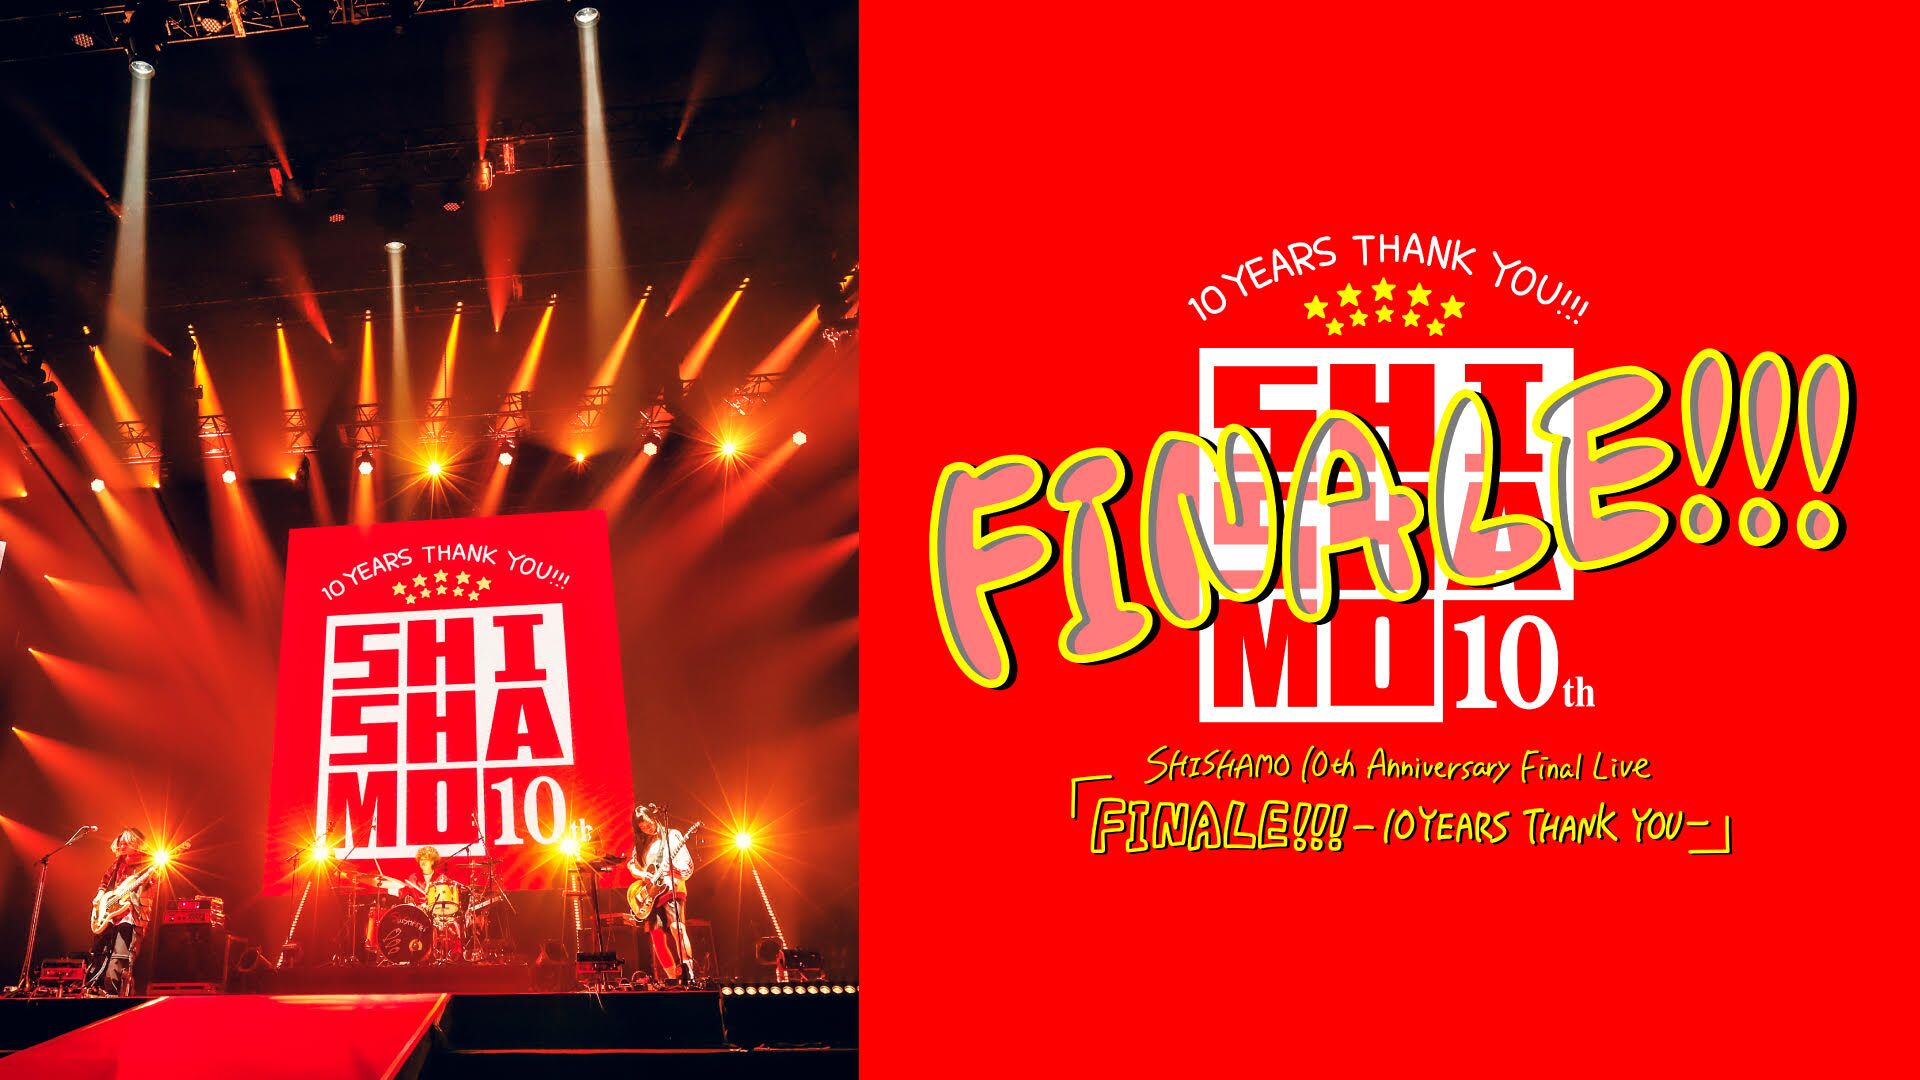 [Streaming+] SHISHAMO 10th Anniversary Final Live　｢FINALE!!! -10YEARS THANK YOU-｣